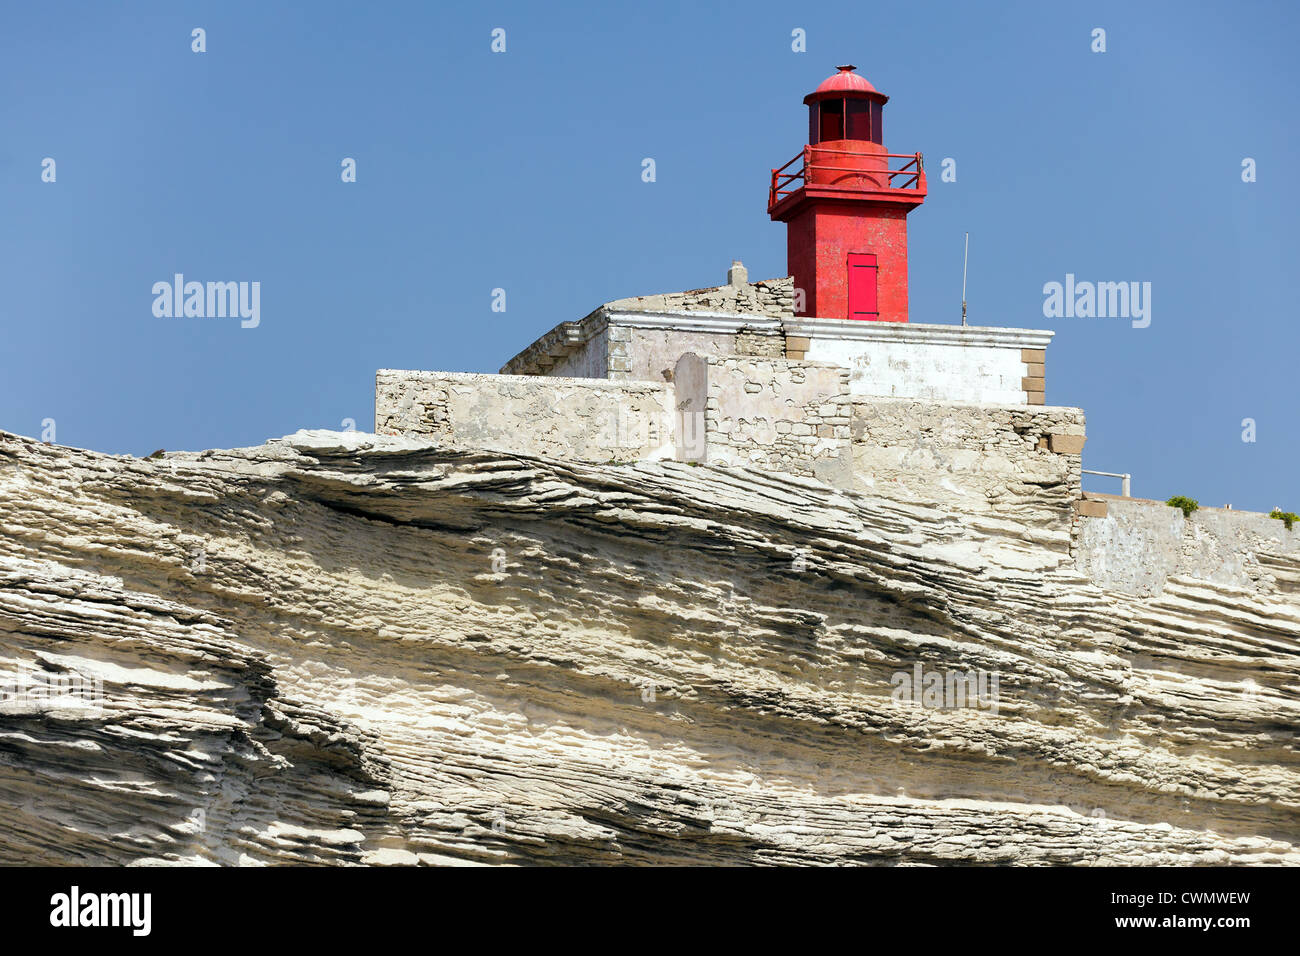 Madonetta lighthouse on limestone cliff, Corsica island, France Stock Photo